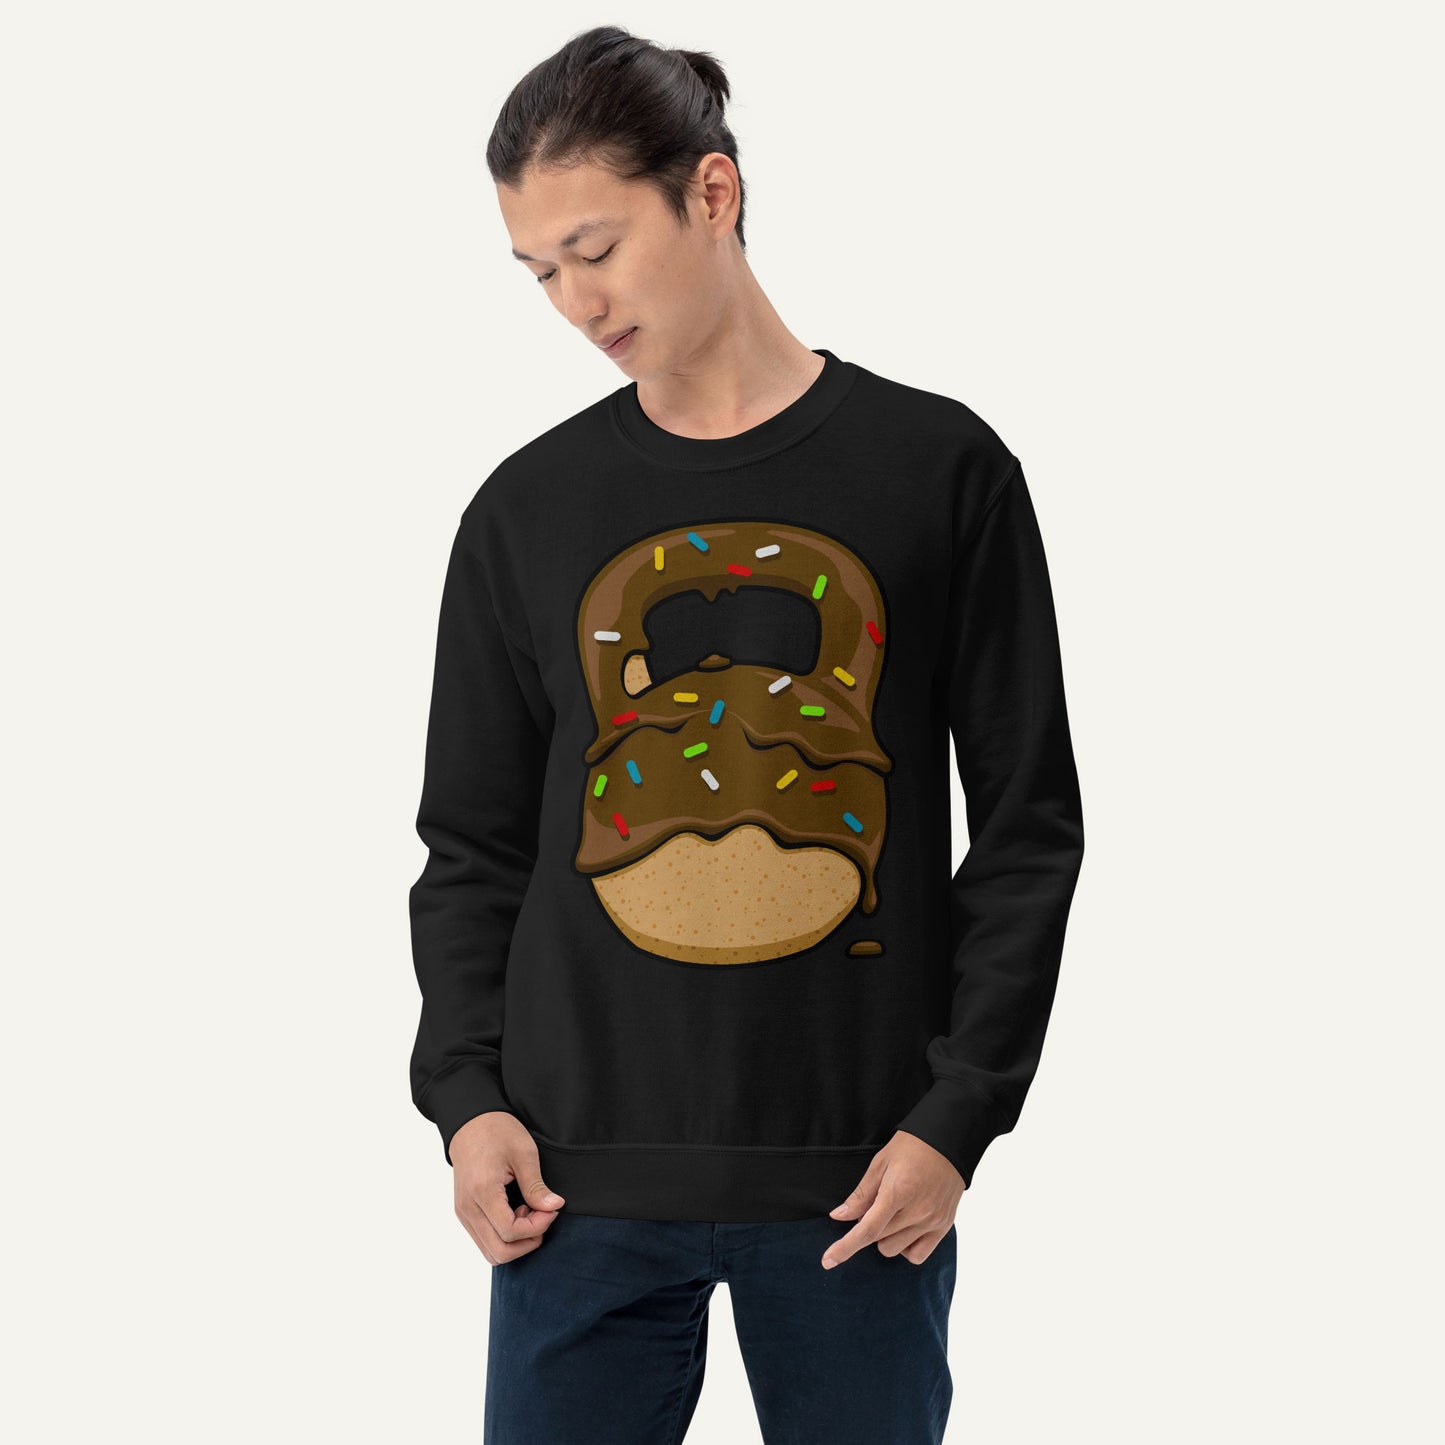 Chocolate-Glazed Donut With Sprinkles Kettlebell Design Sweatshirt